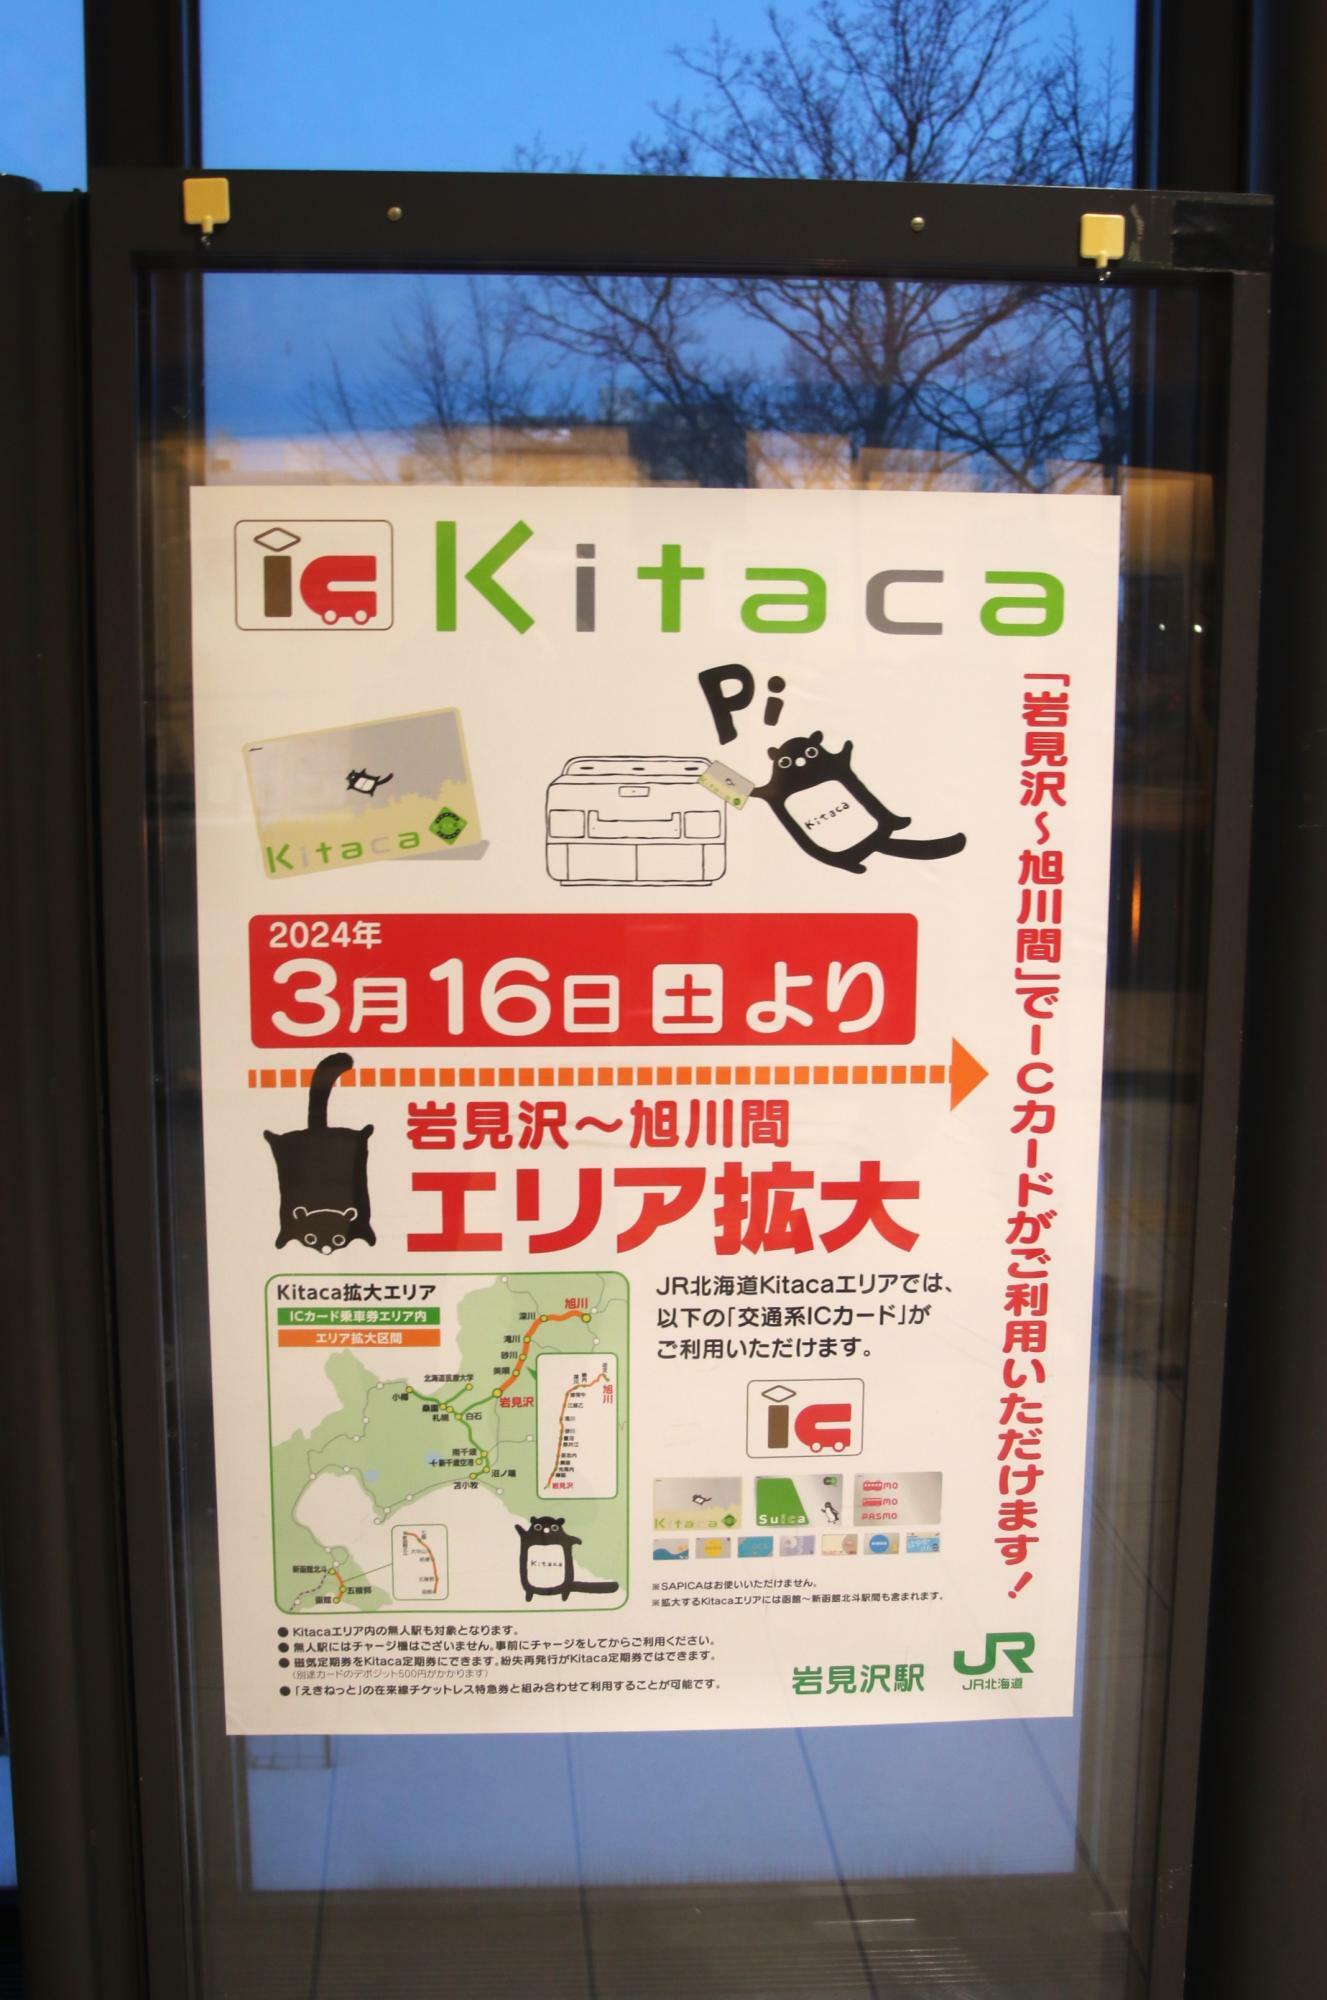 ICカード「Kitaca」が岩見沢ー旭川で使用可能に